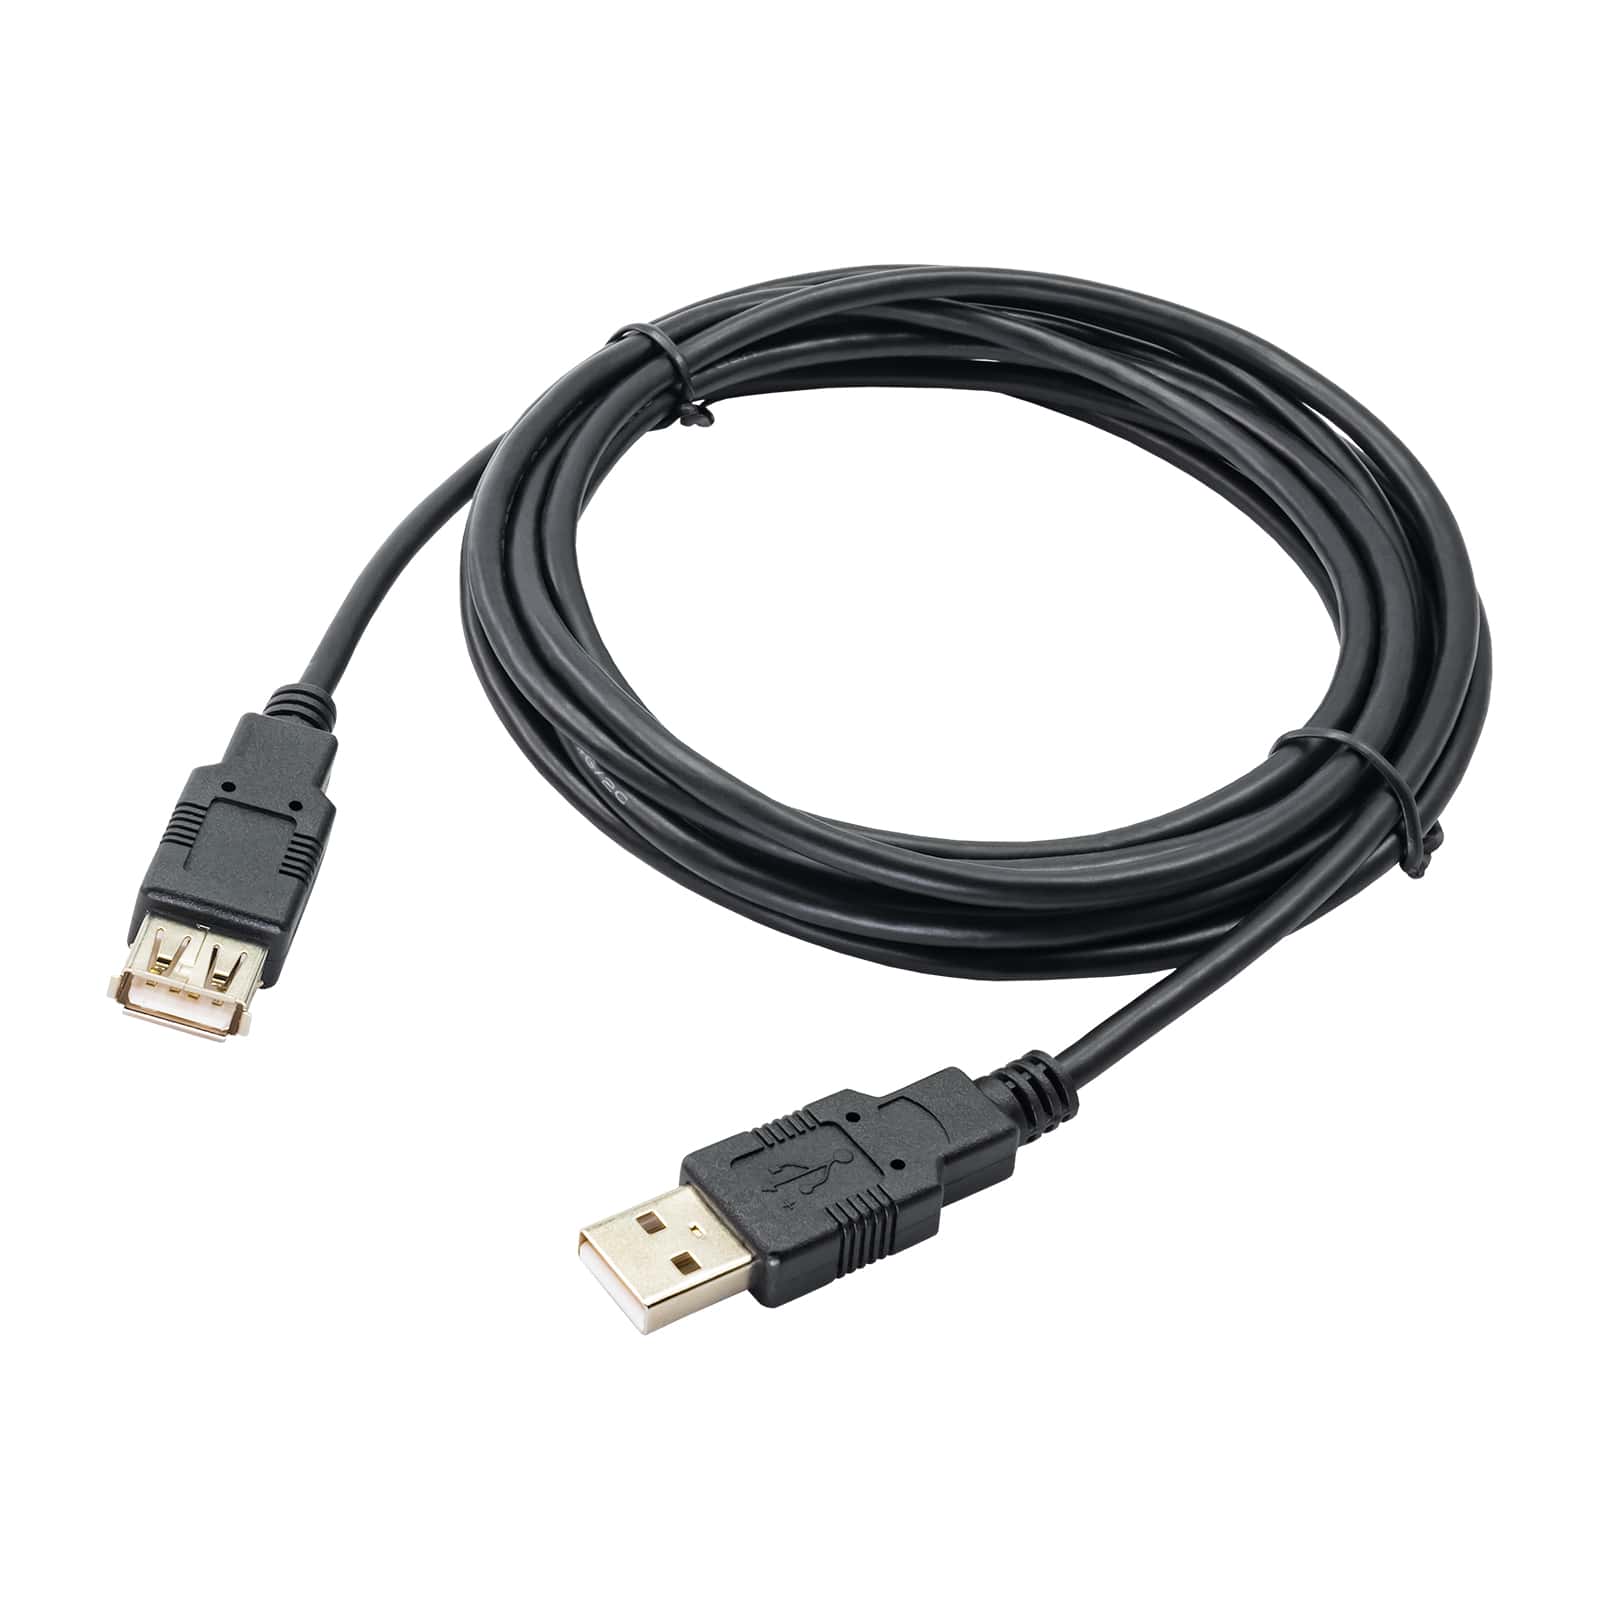 SKU : 30cm USB USB 2.0 AM to AF Extension Cable Length: 30cm USB cables 